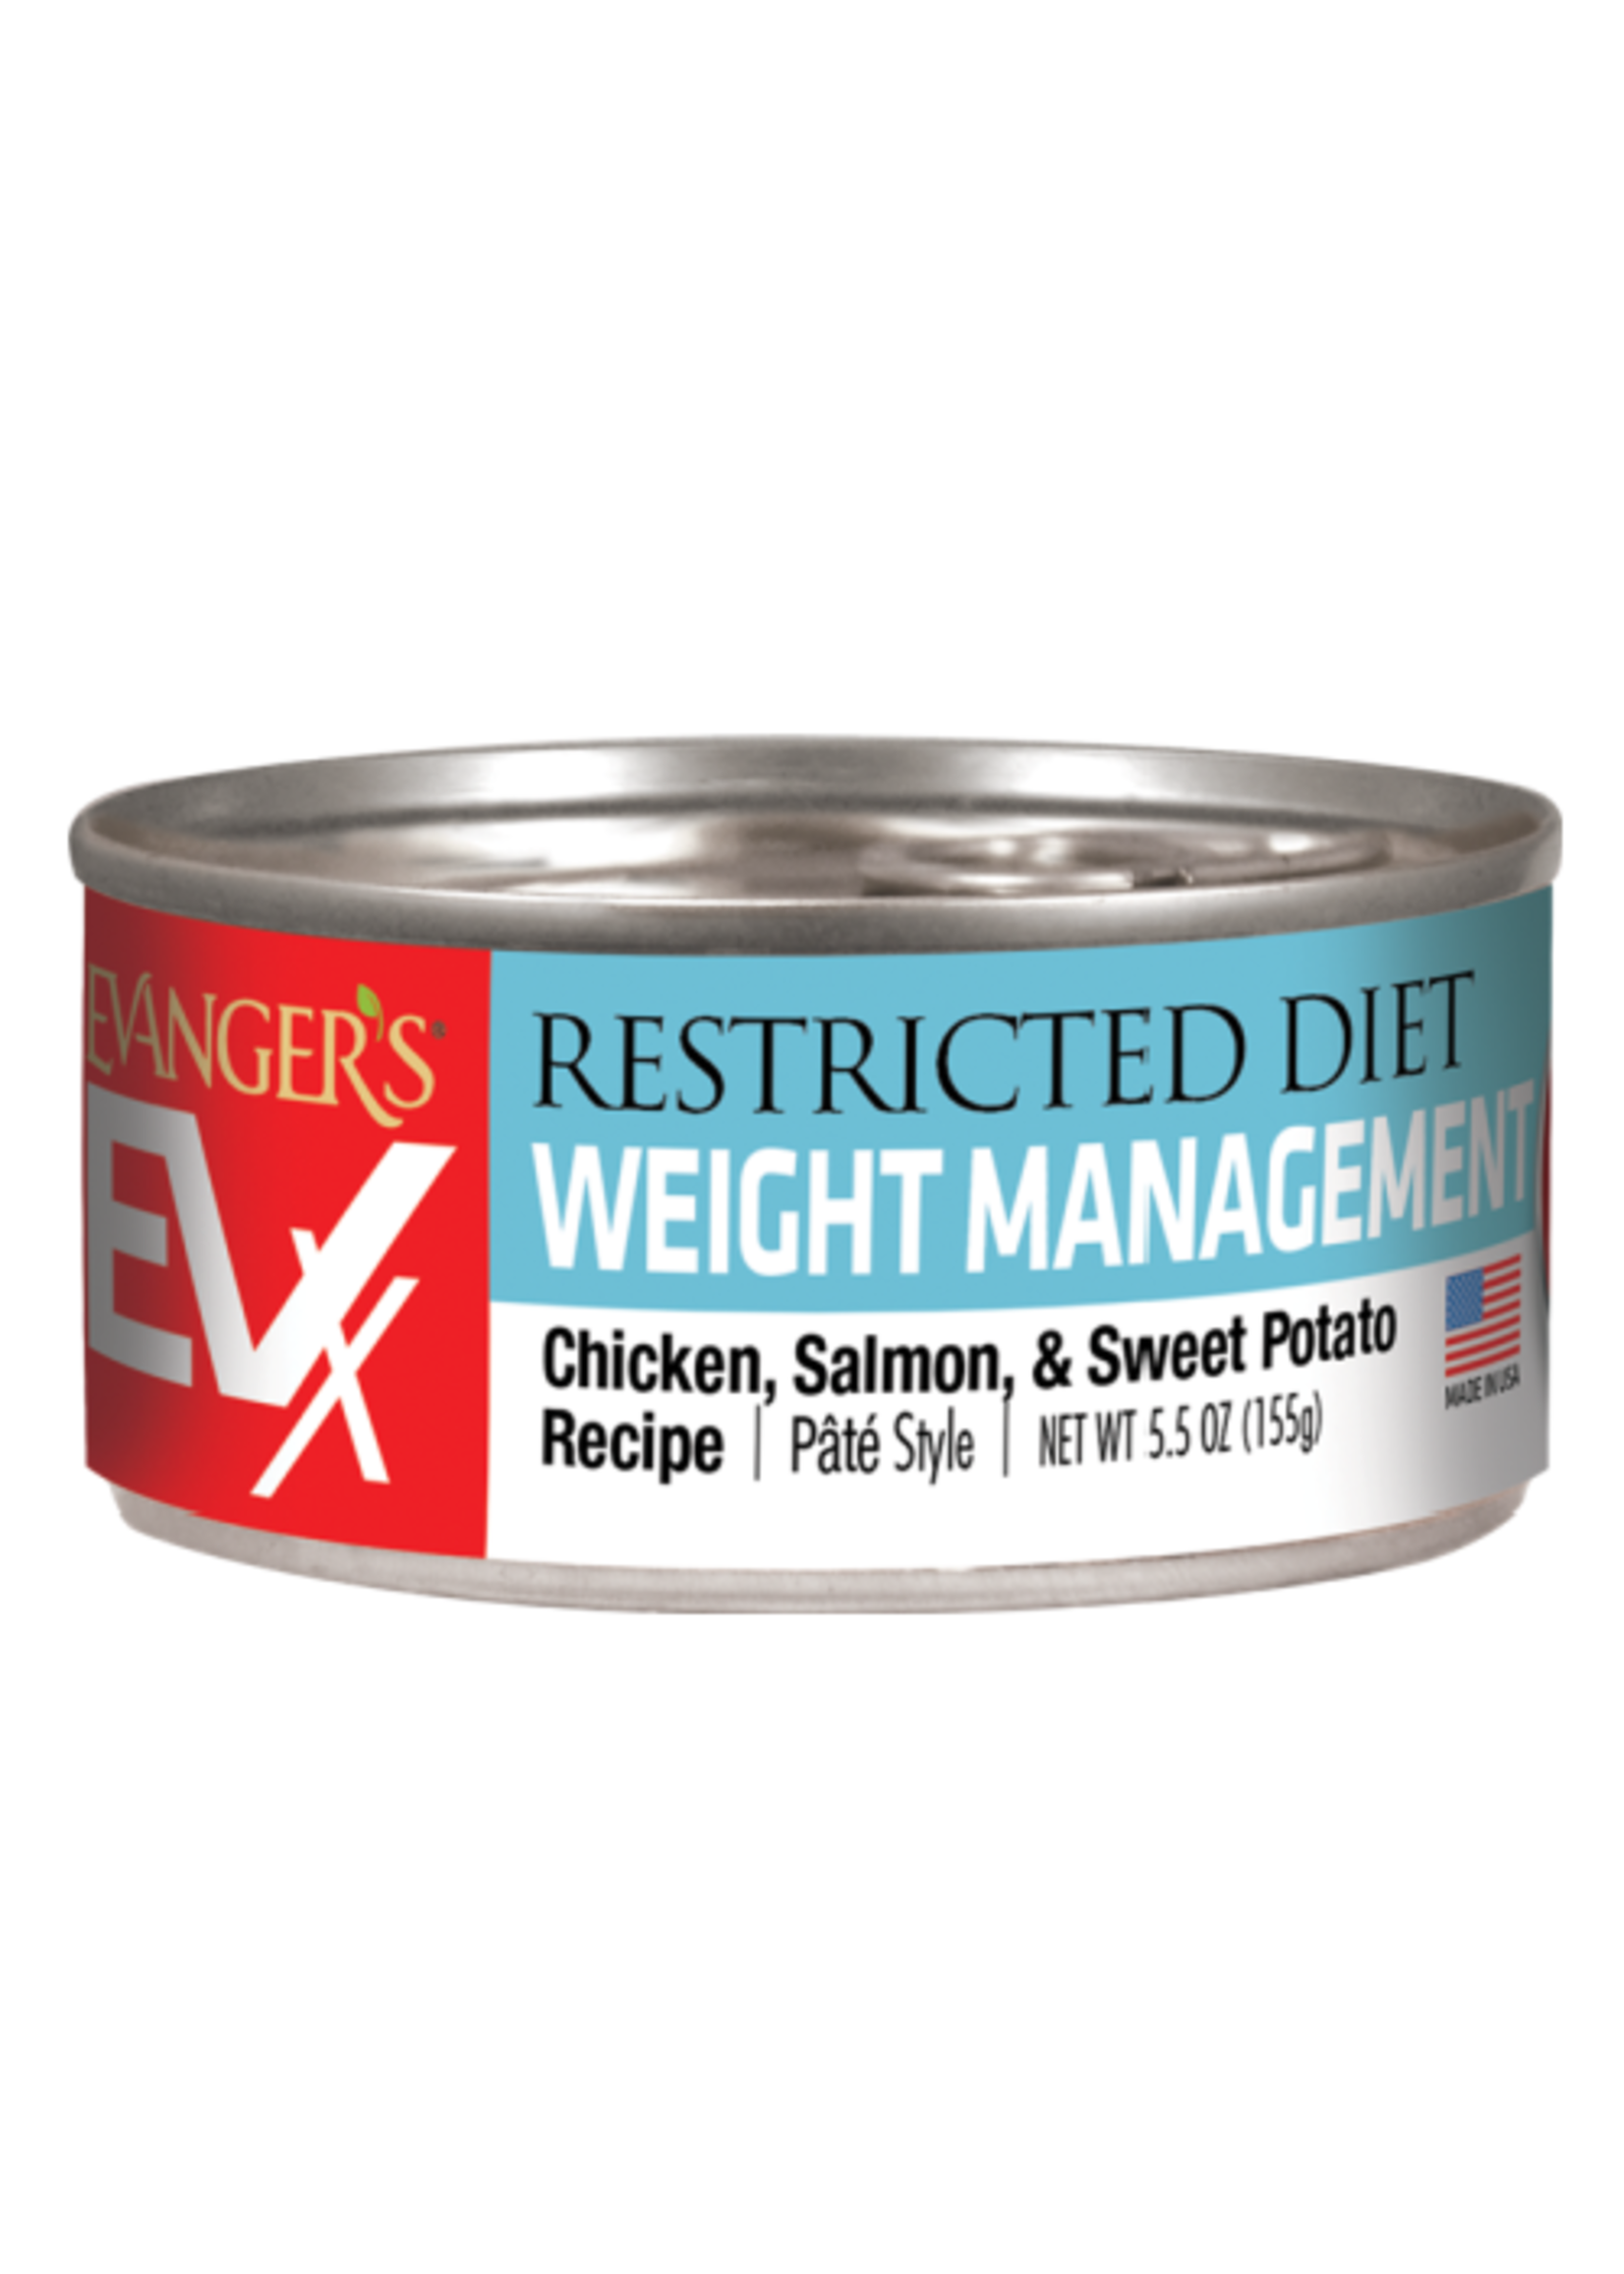 Evanger's Evanger's EVX Restricted Diet Weight Management Cat Food, 5.5oz Can